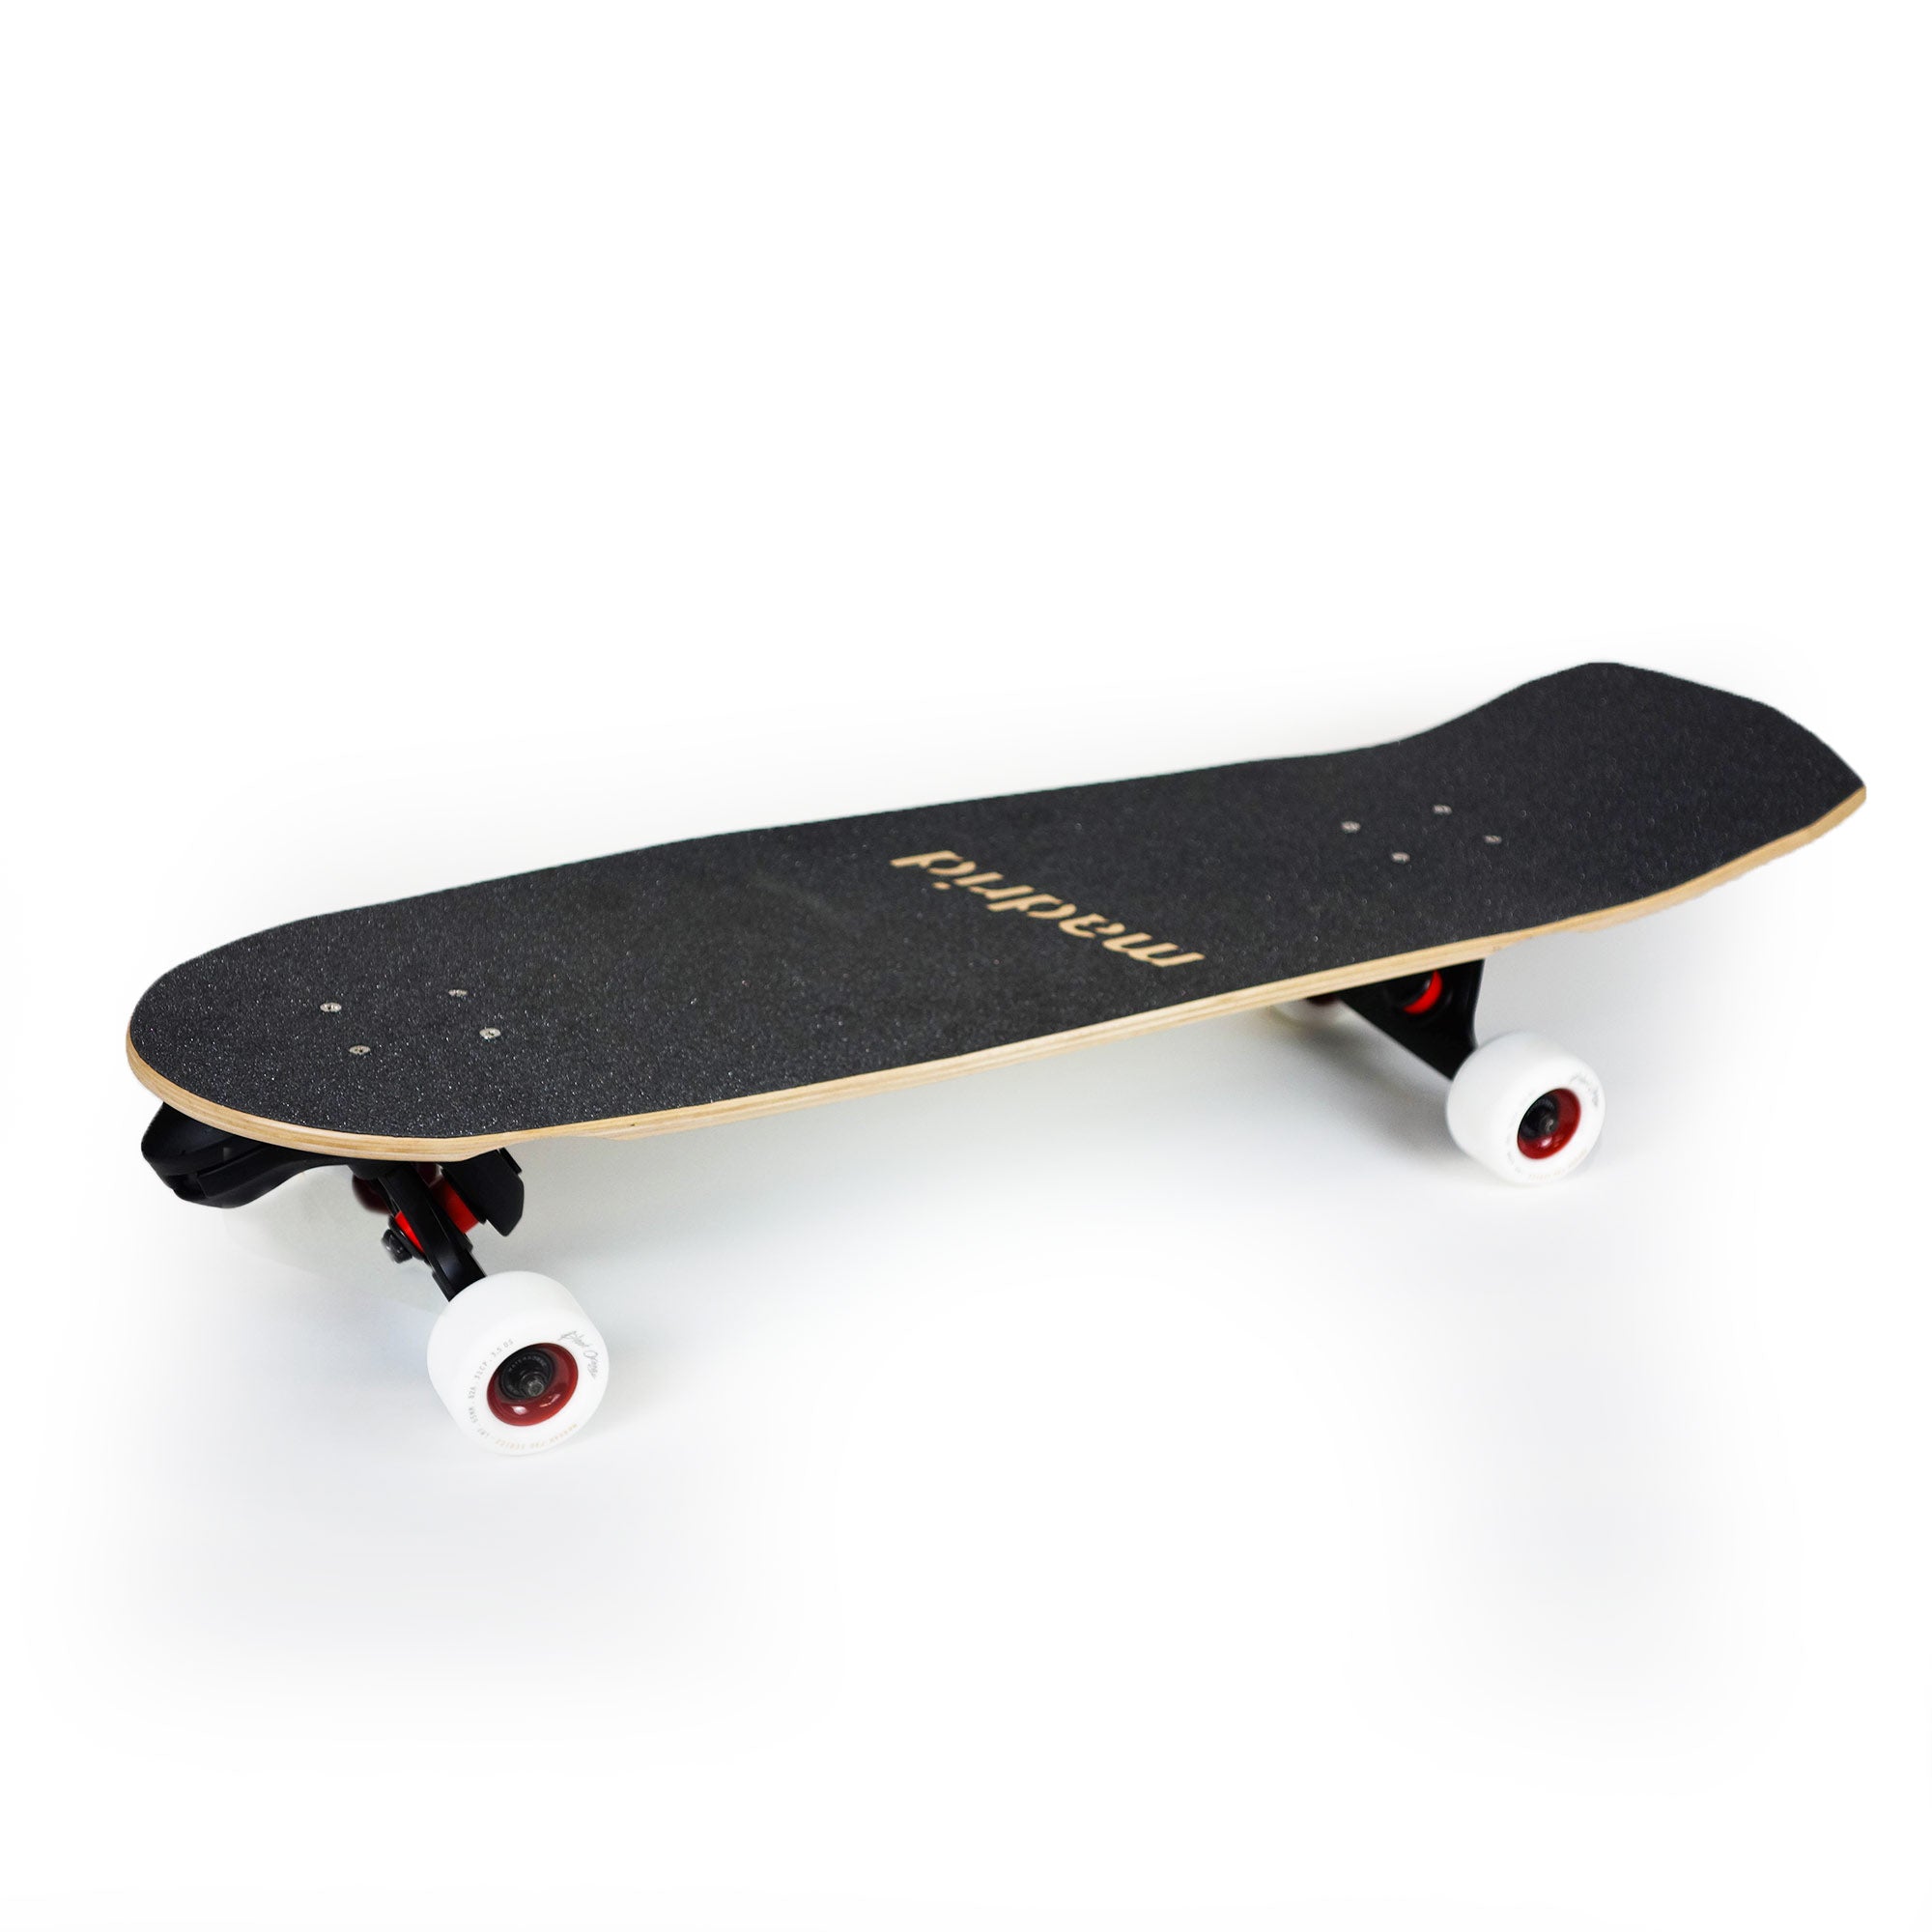 SCORPIO Carbon Performance Surfskate – Waterborne Skateboards